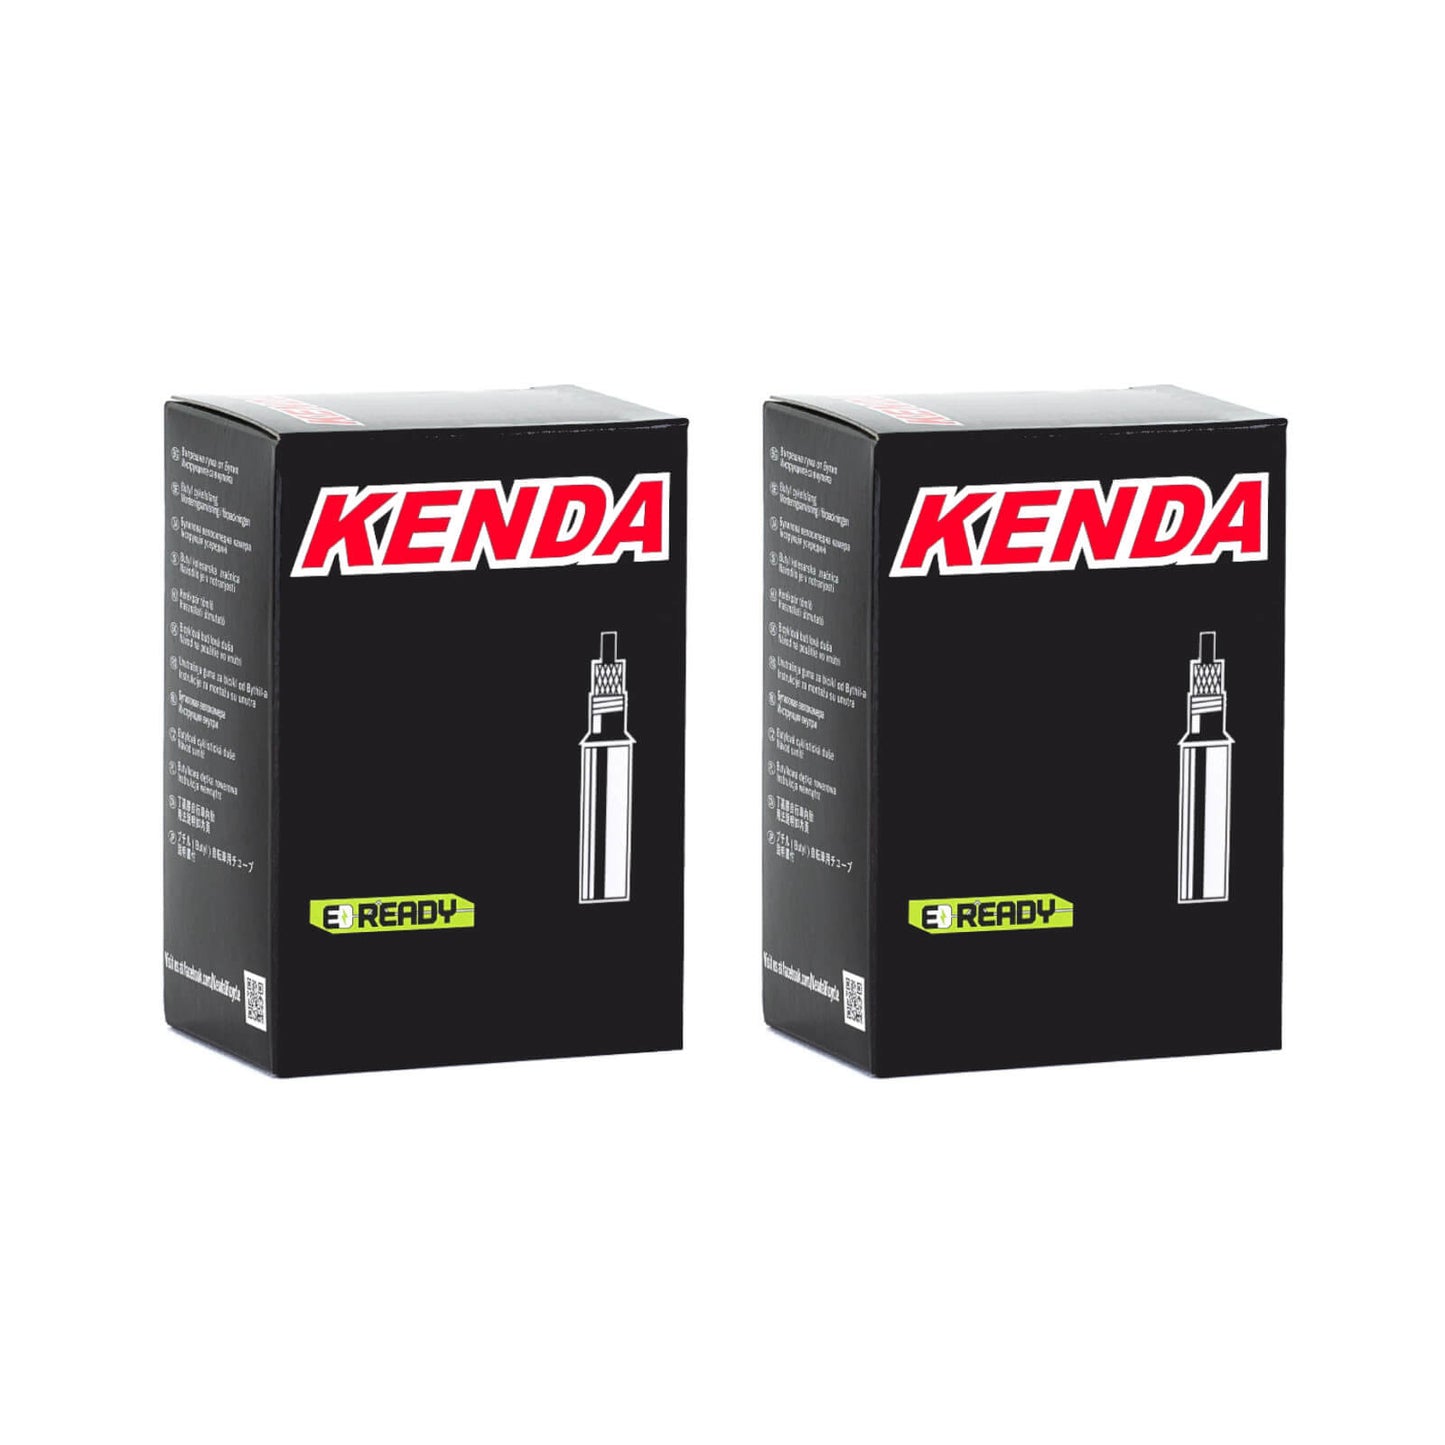 Kenda 26x1.5-1.75" 26 Inch Presta Valve Bike Inner Tube Pack of 2